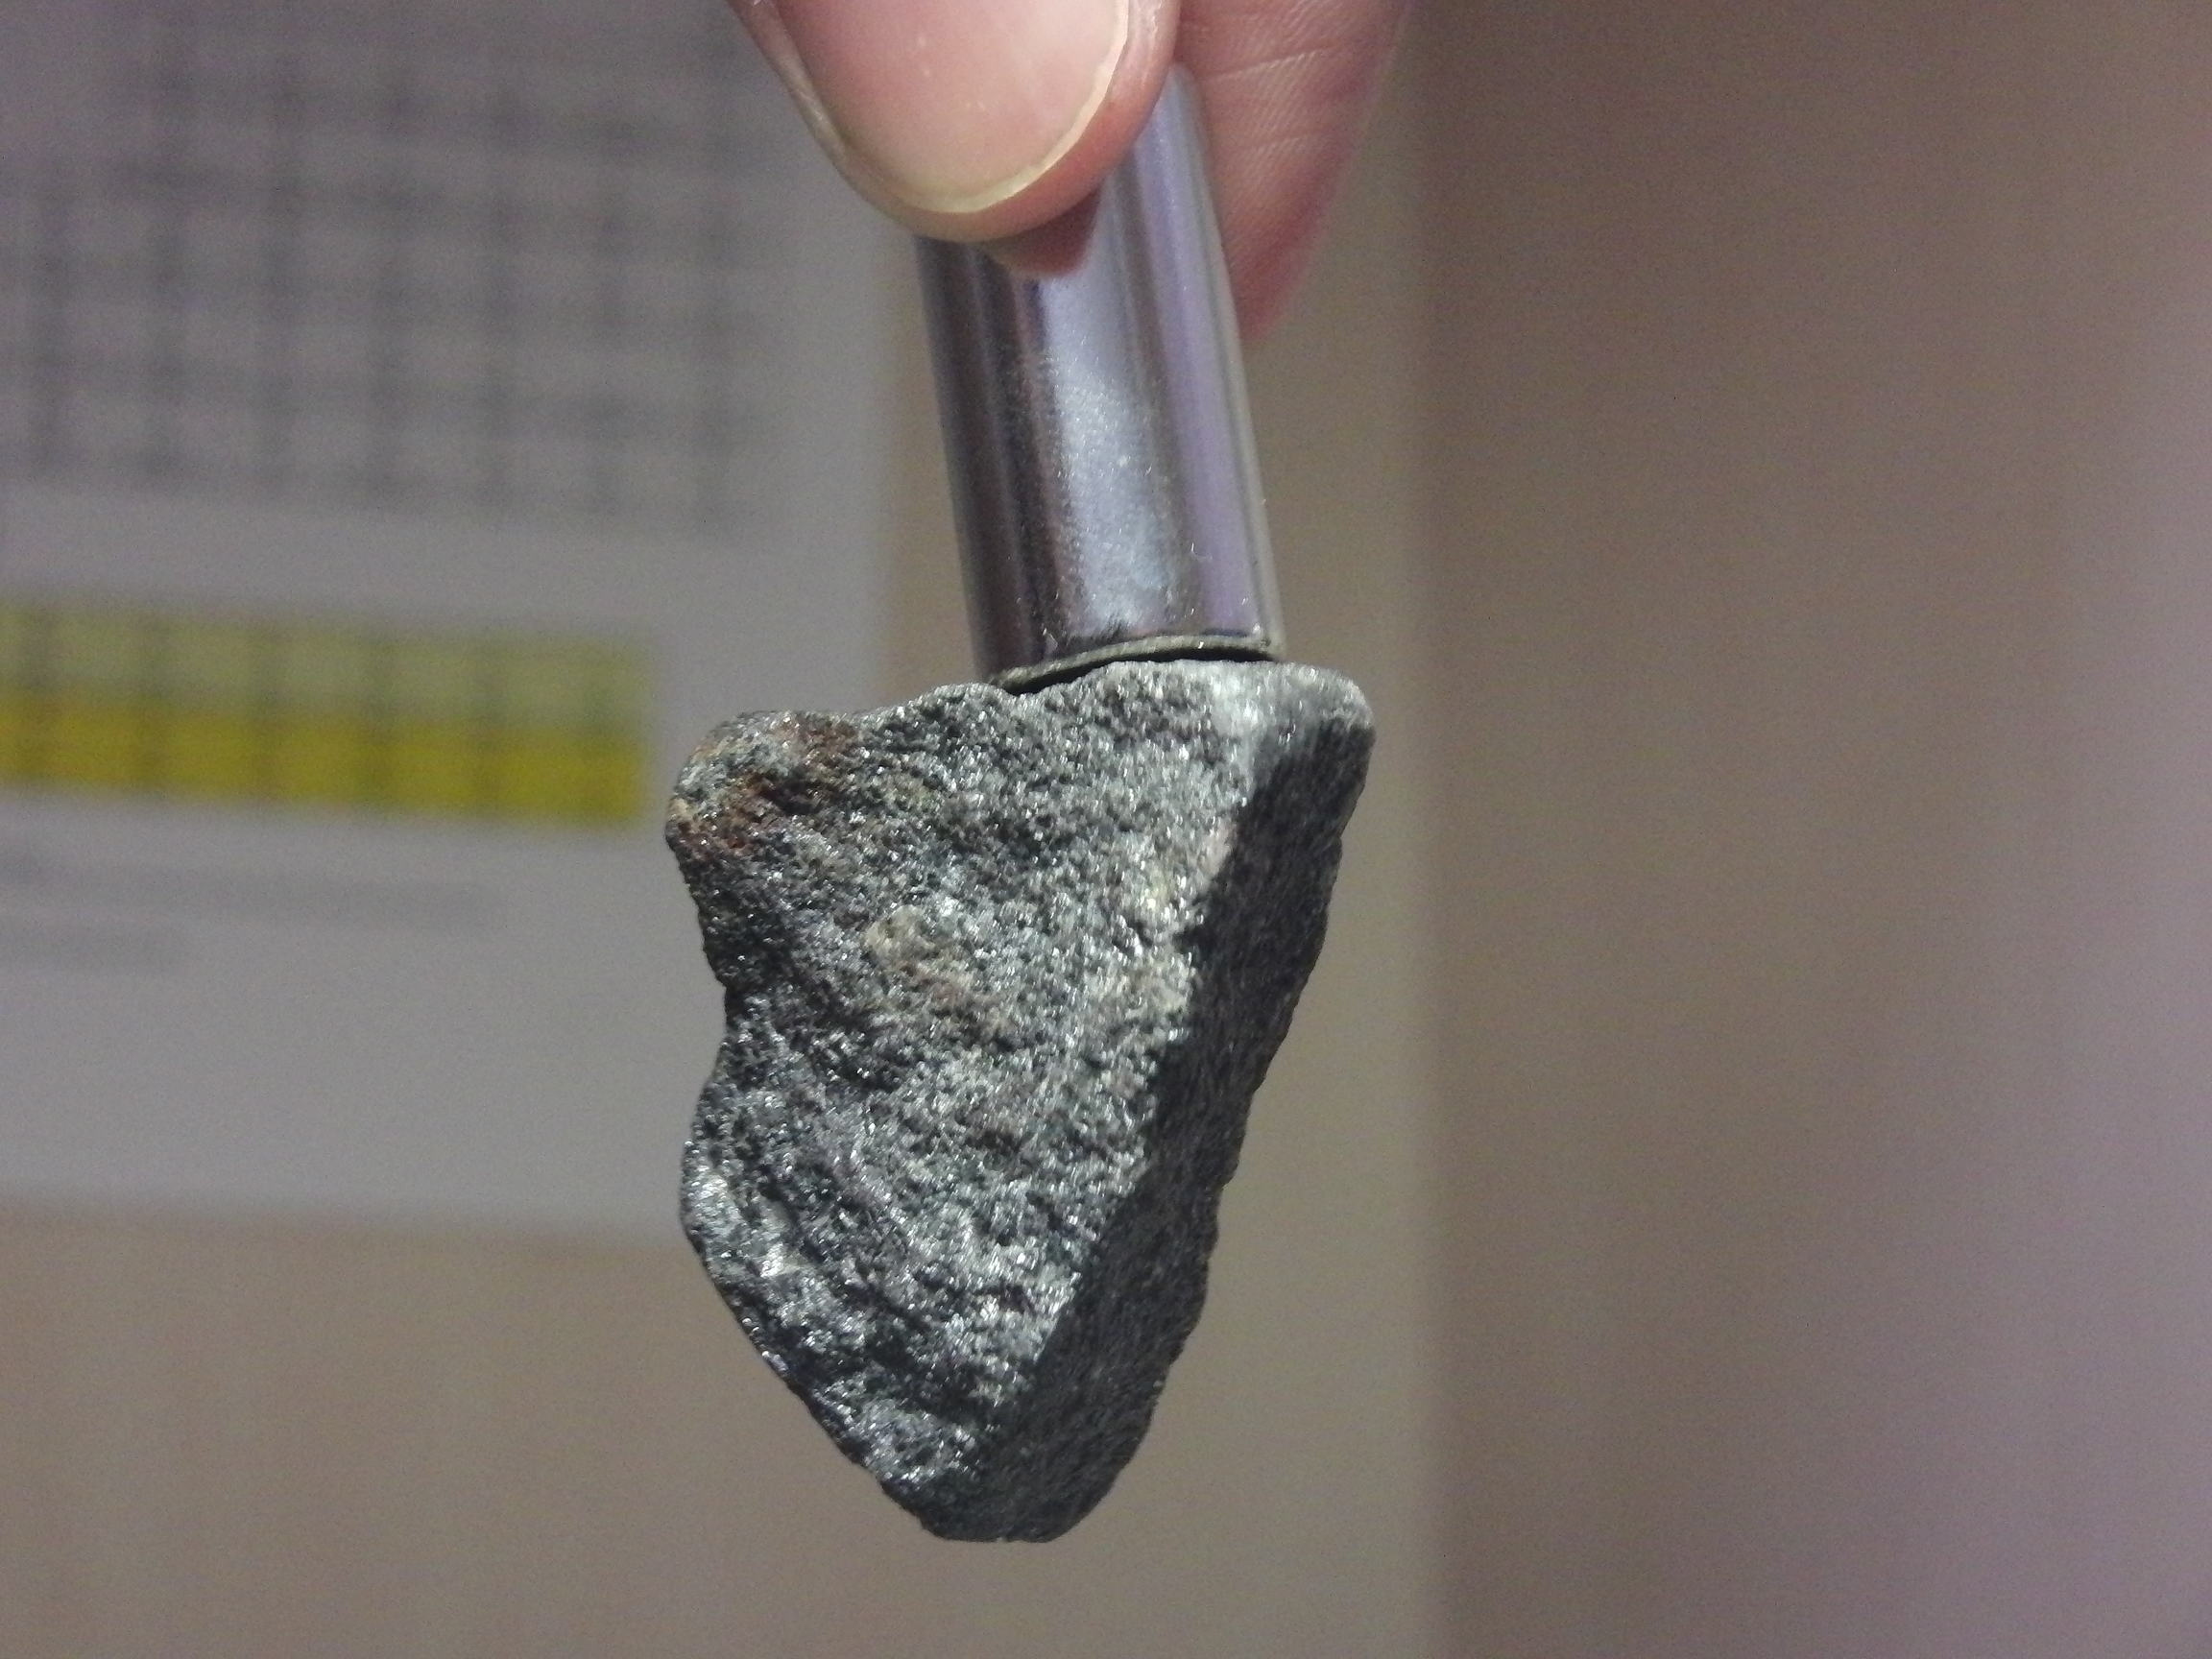 Magnetite sample with neodymium magnet